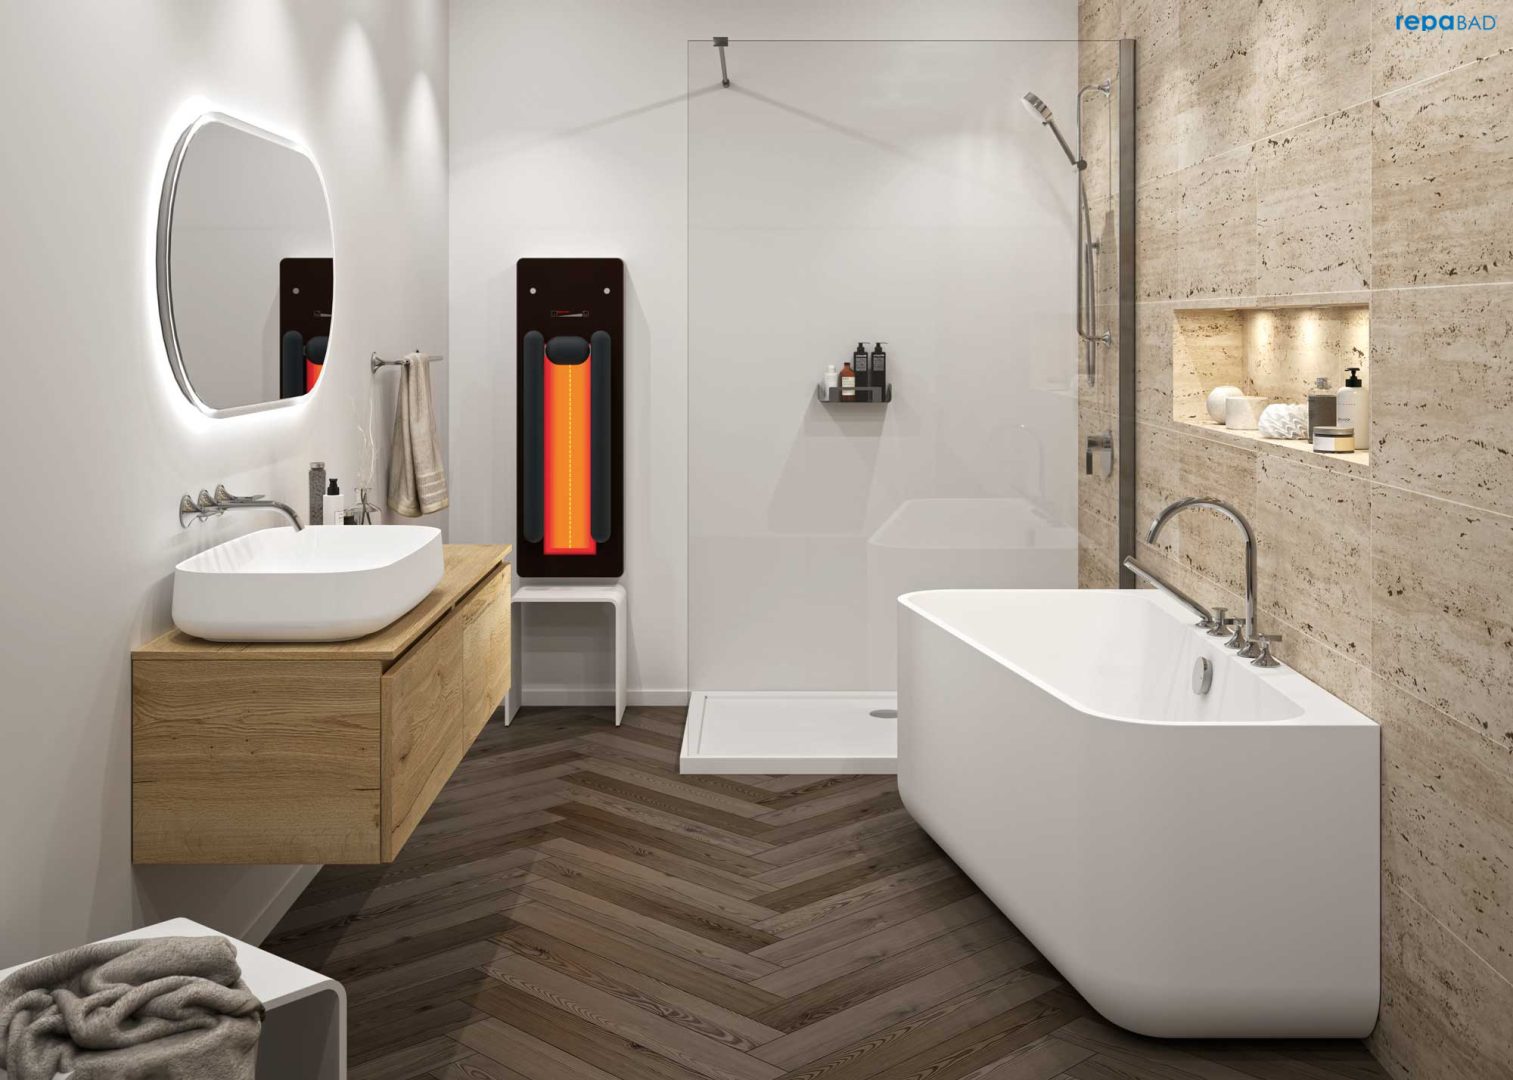 salle de bain moderne avec douche spacieuse et panneau infrarouge